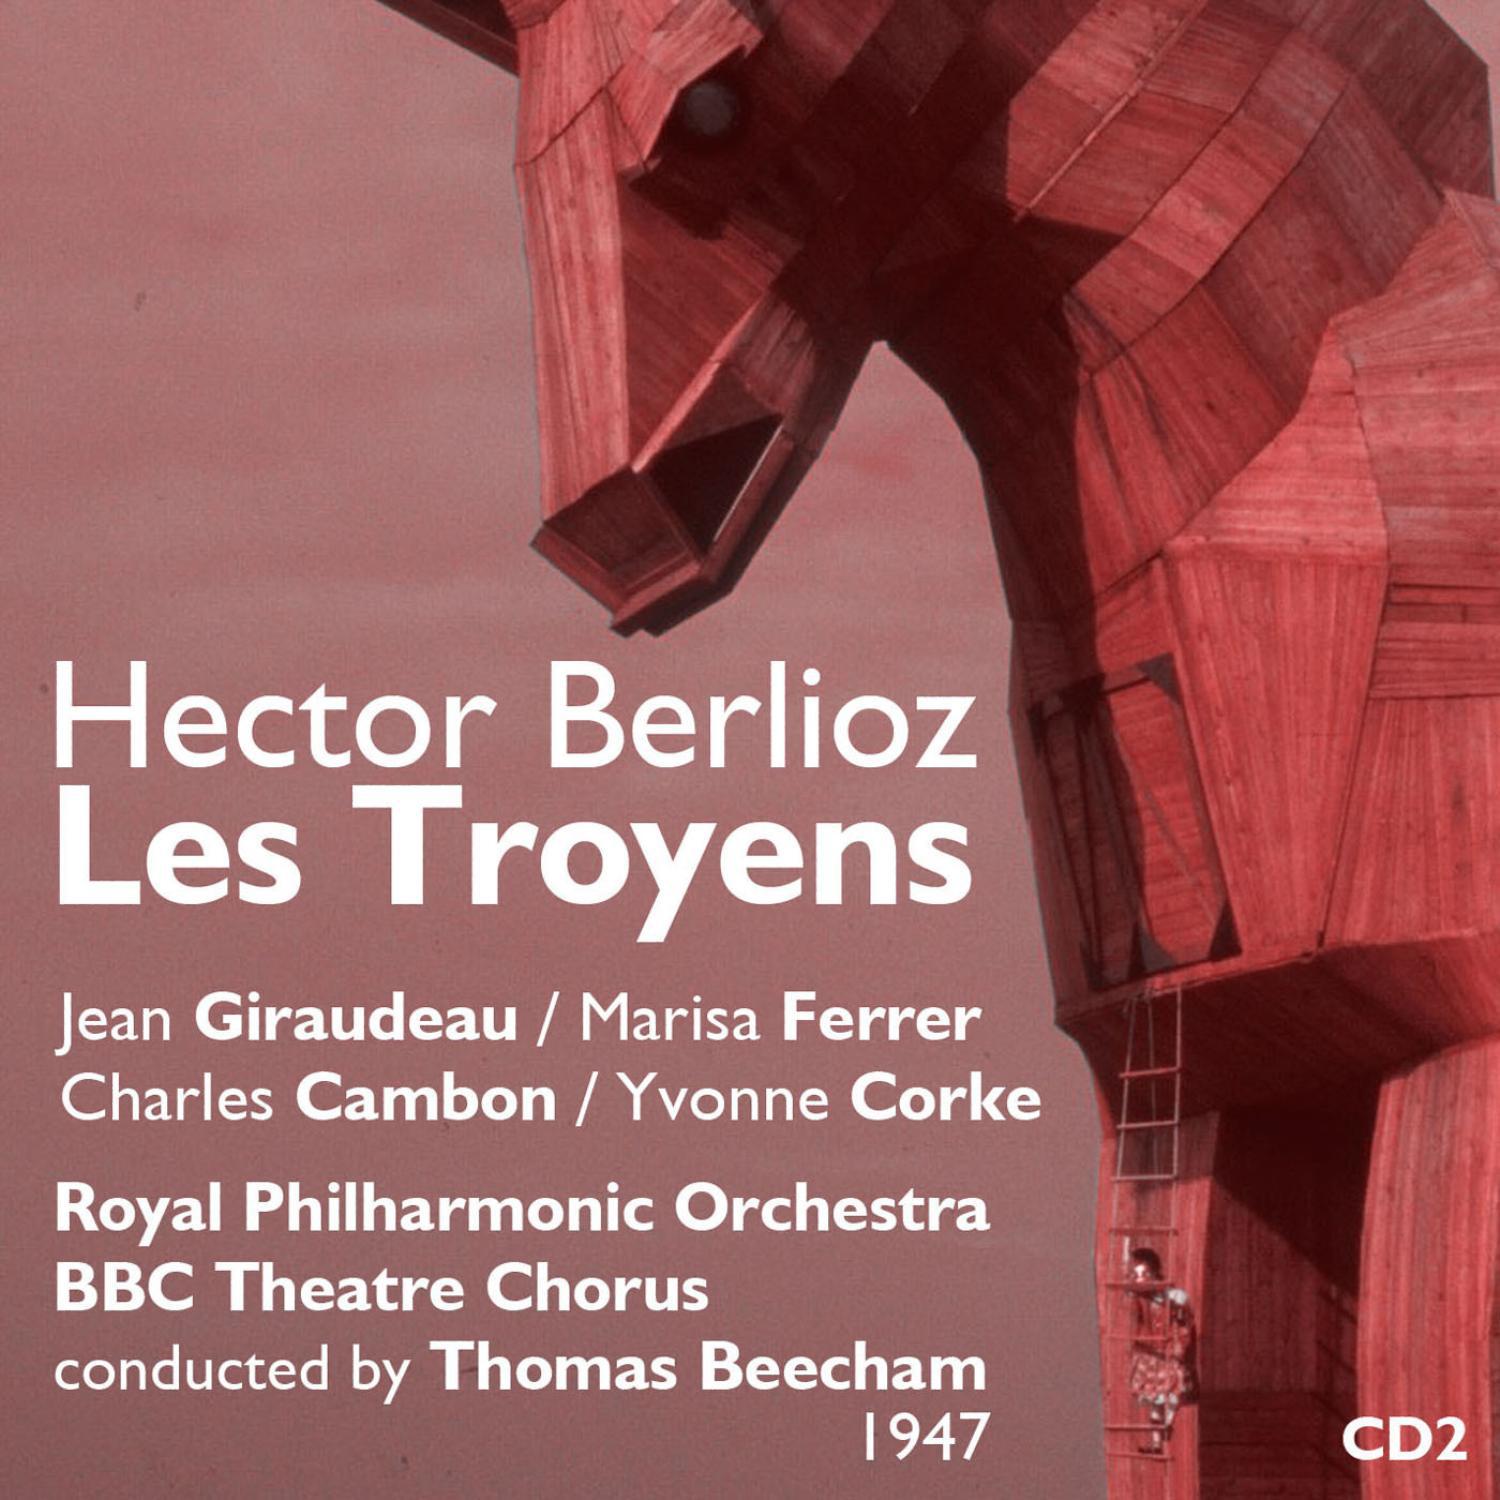 Jean Giraudeau - Hector Berlioz: Les Troyens - Act III, 